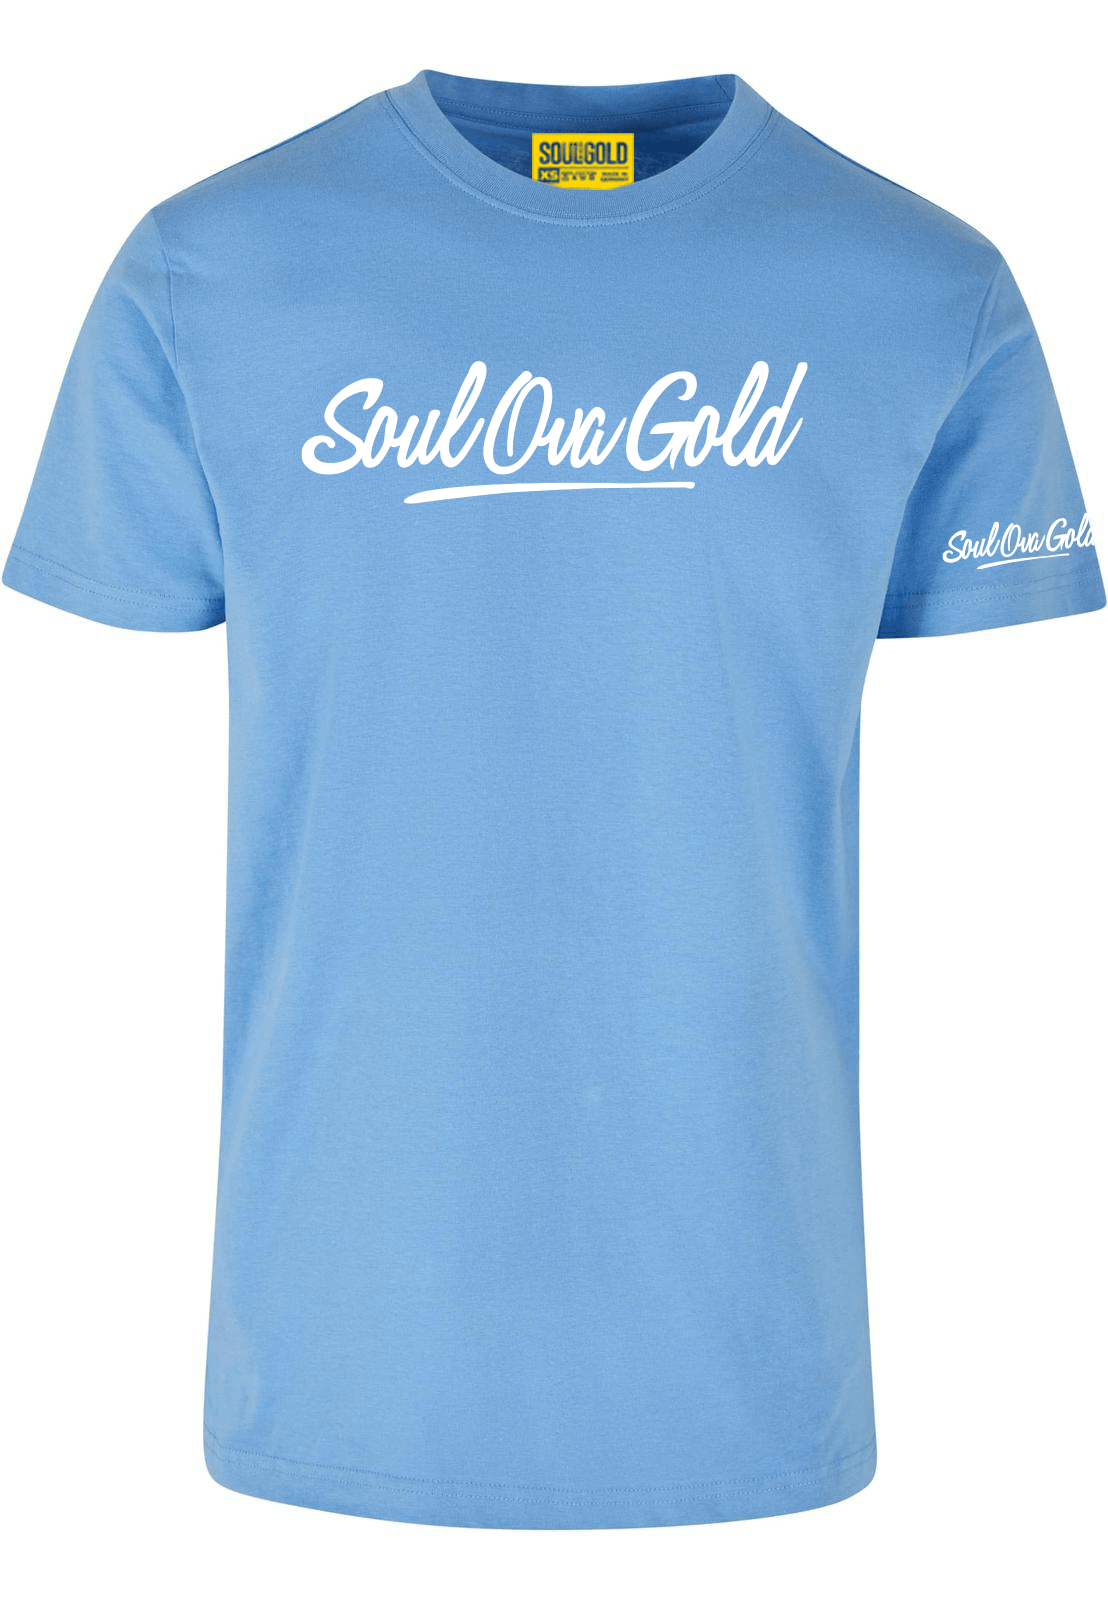 Soul Ova Gold Men's Tees Stick 2 The Script Classic fit T-Shirt (Horizon Blue)